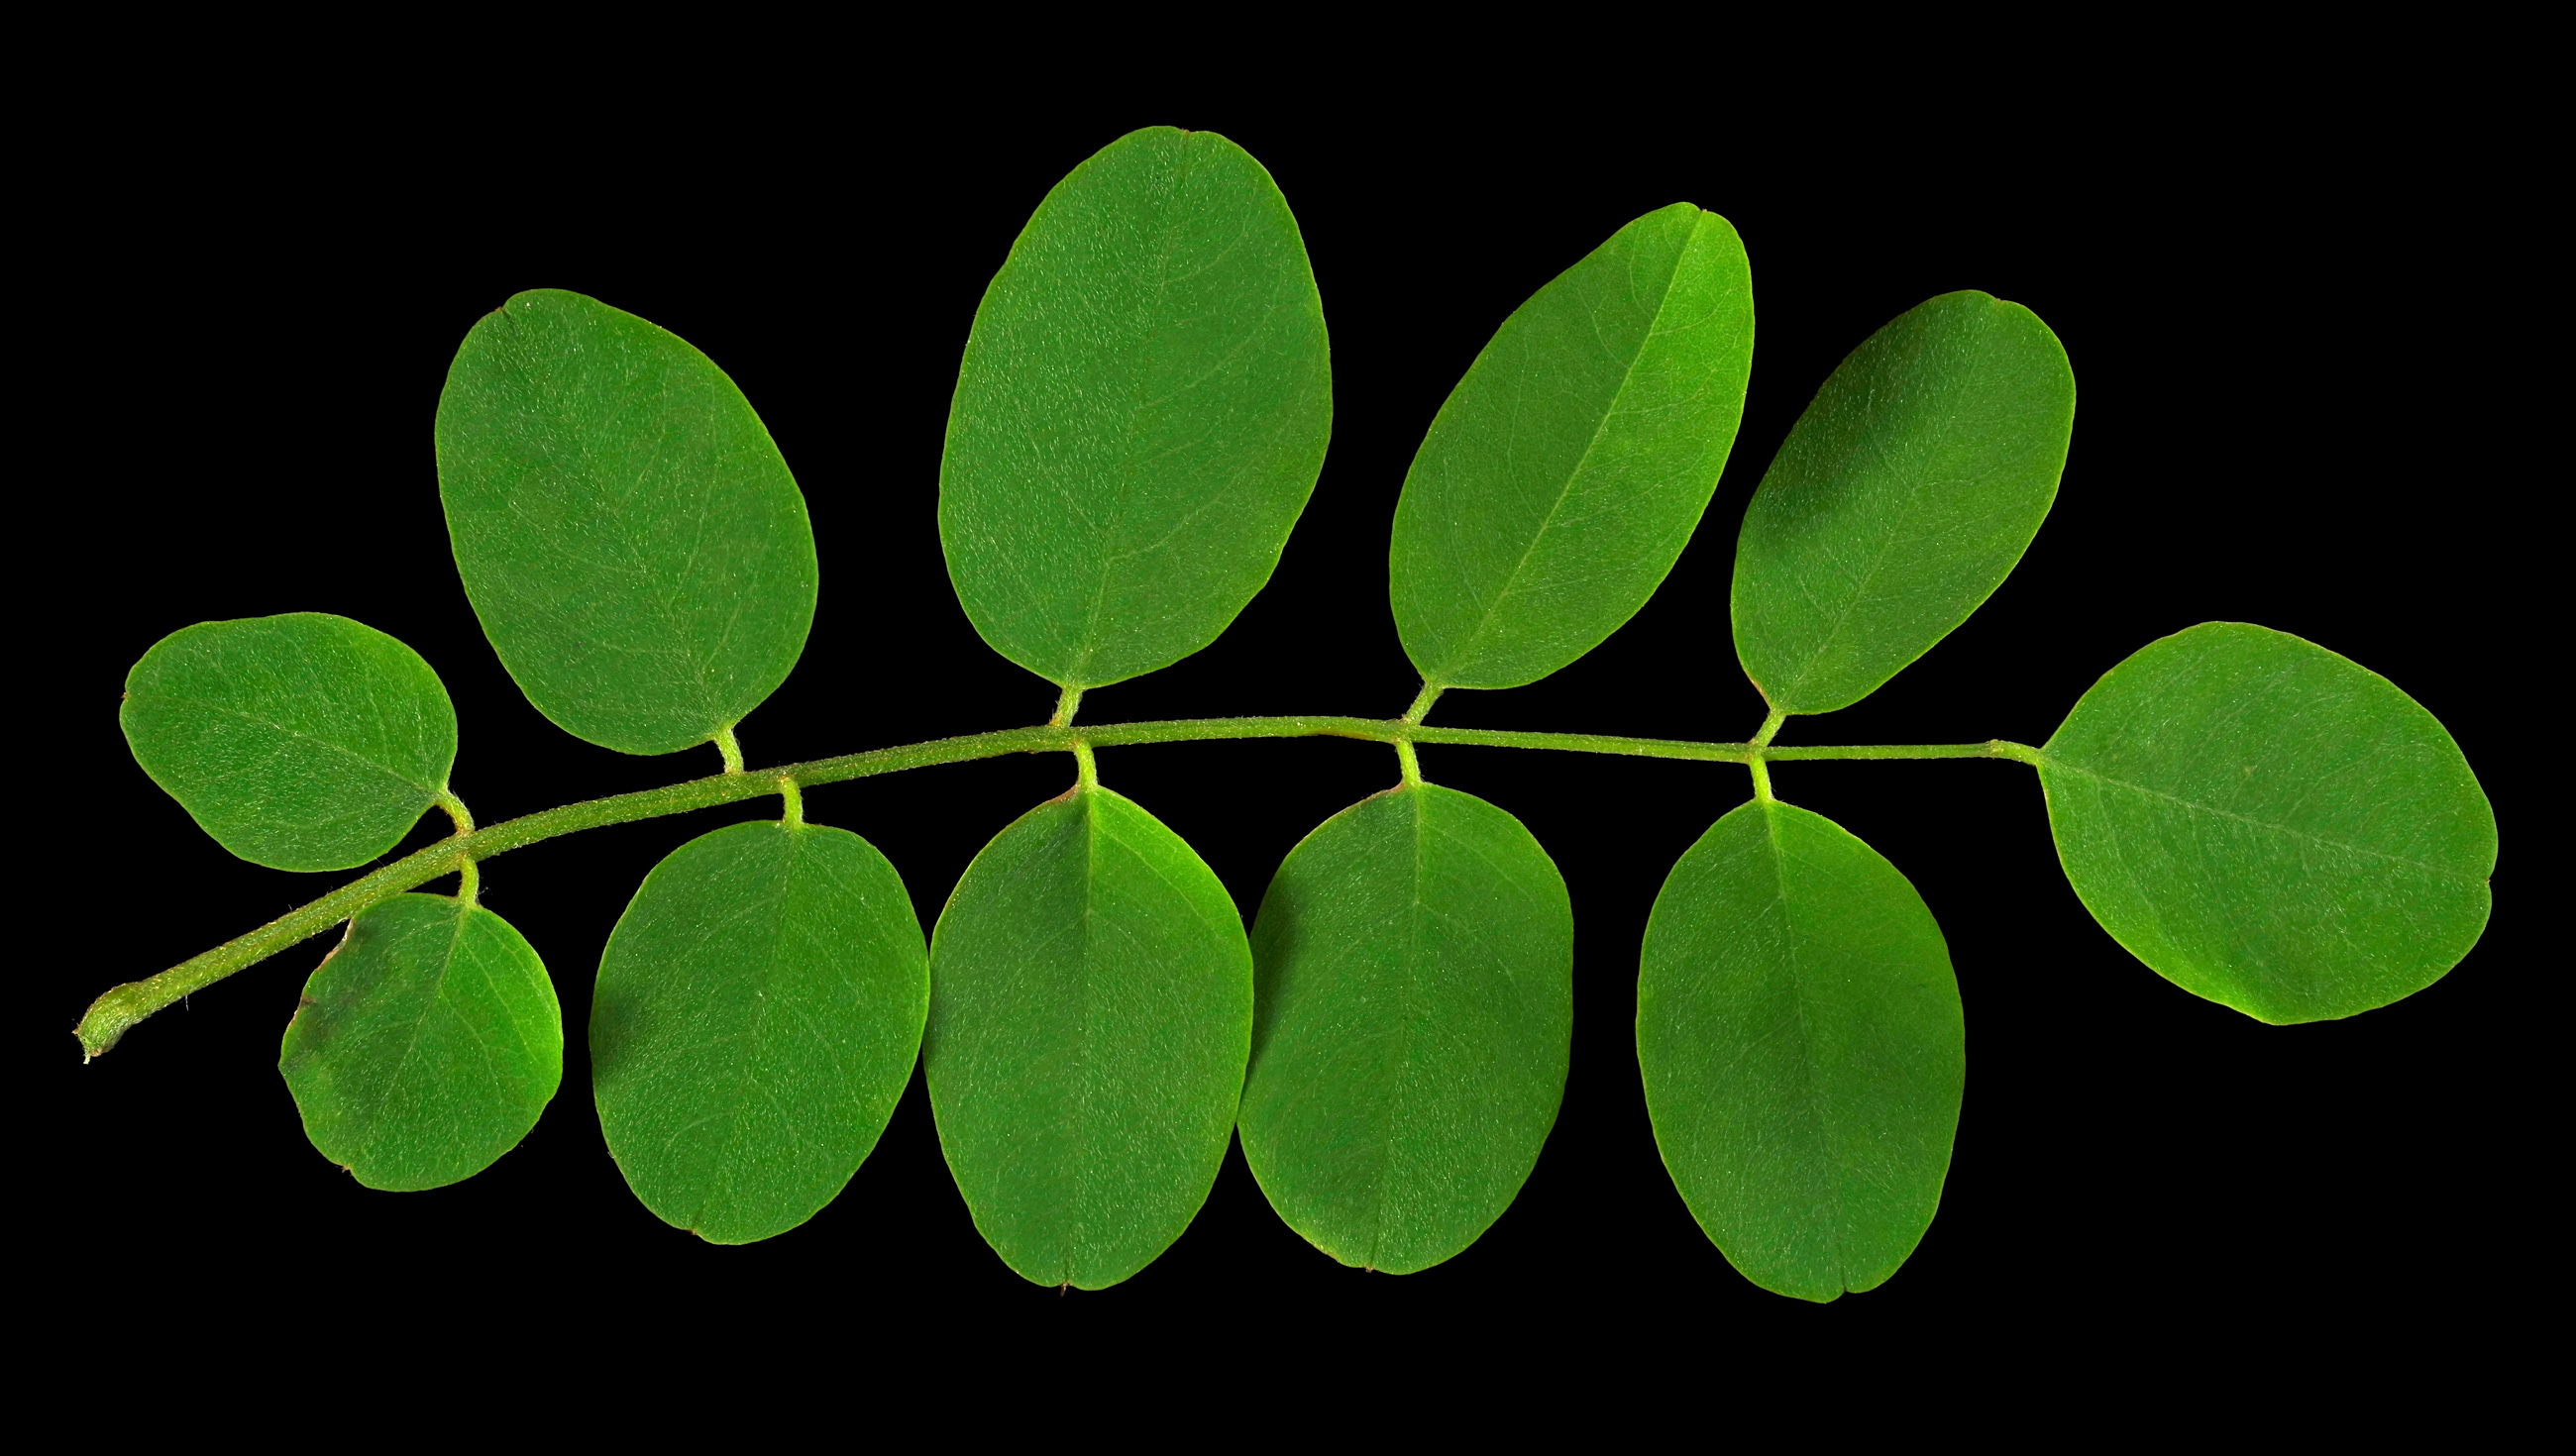 Das Robinienblatt: Robinia pseudoacacia